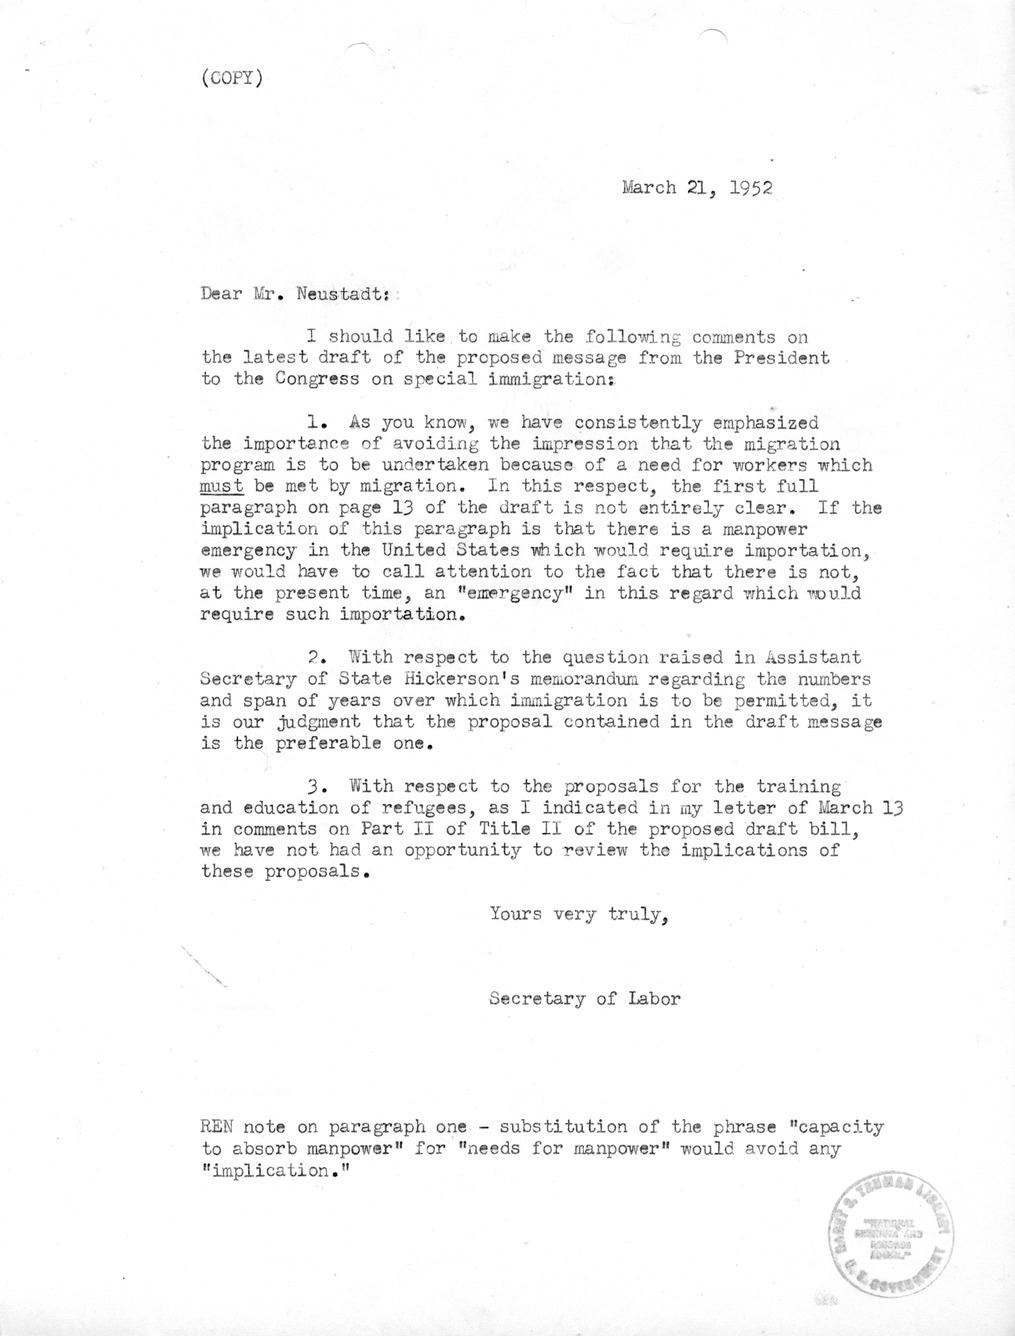 Letter from Secretary of Labor Maurice Tobin to Richard Neustadt